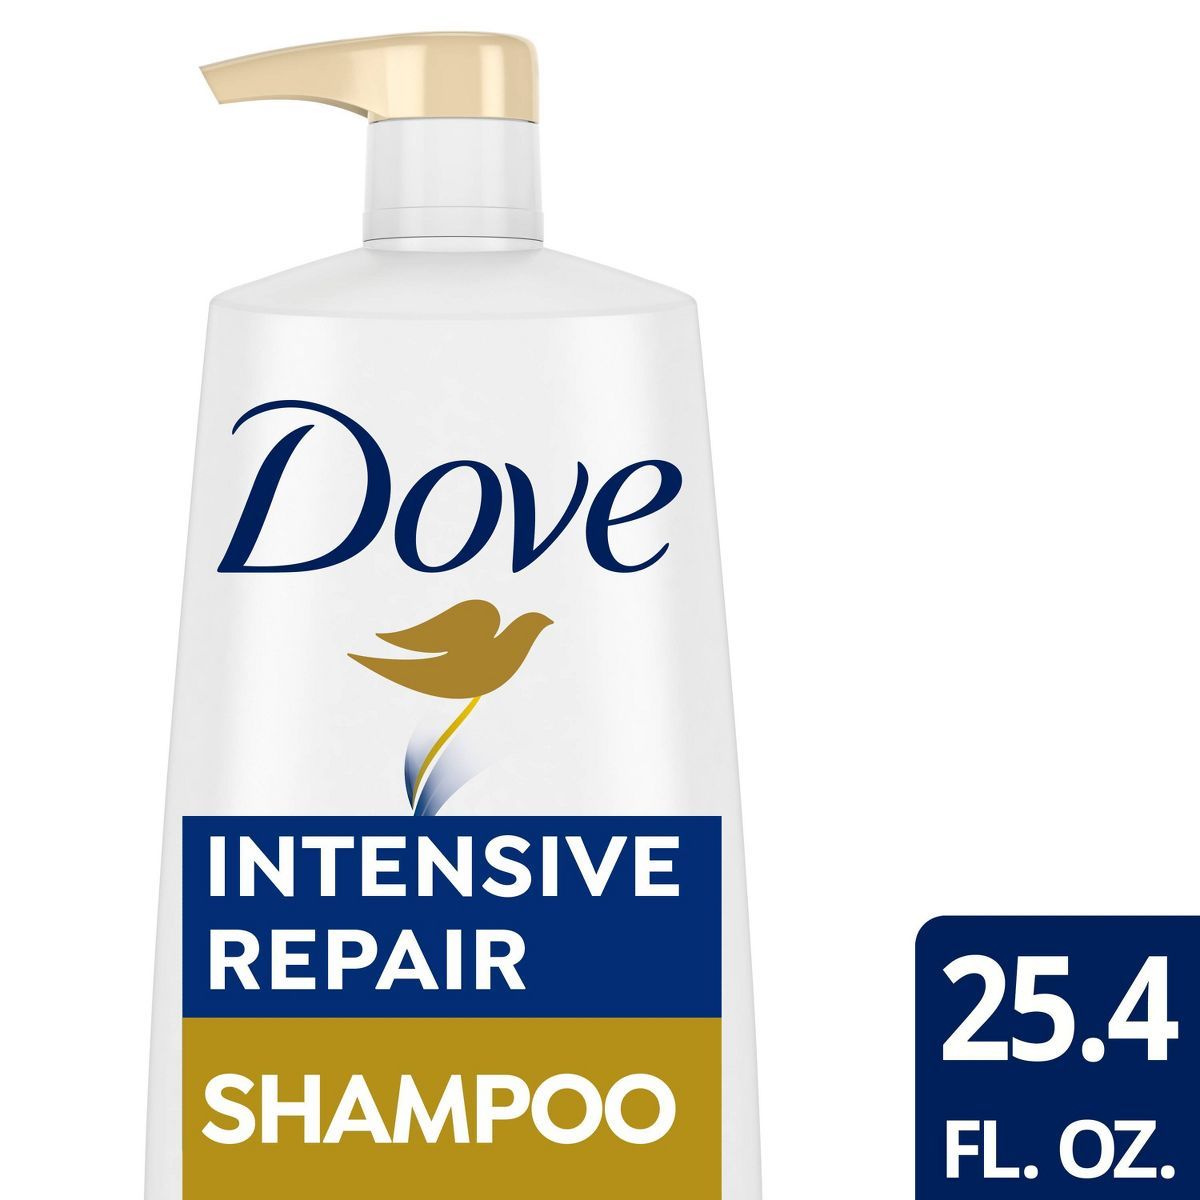 Dove Beauty Intensive Repair Shampoo - 25.4 fl oz | Target